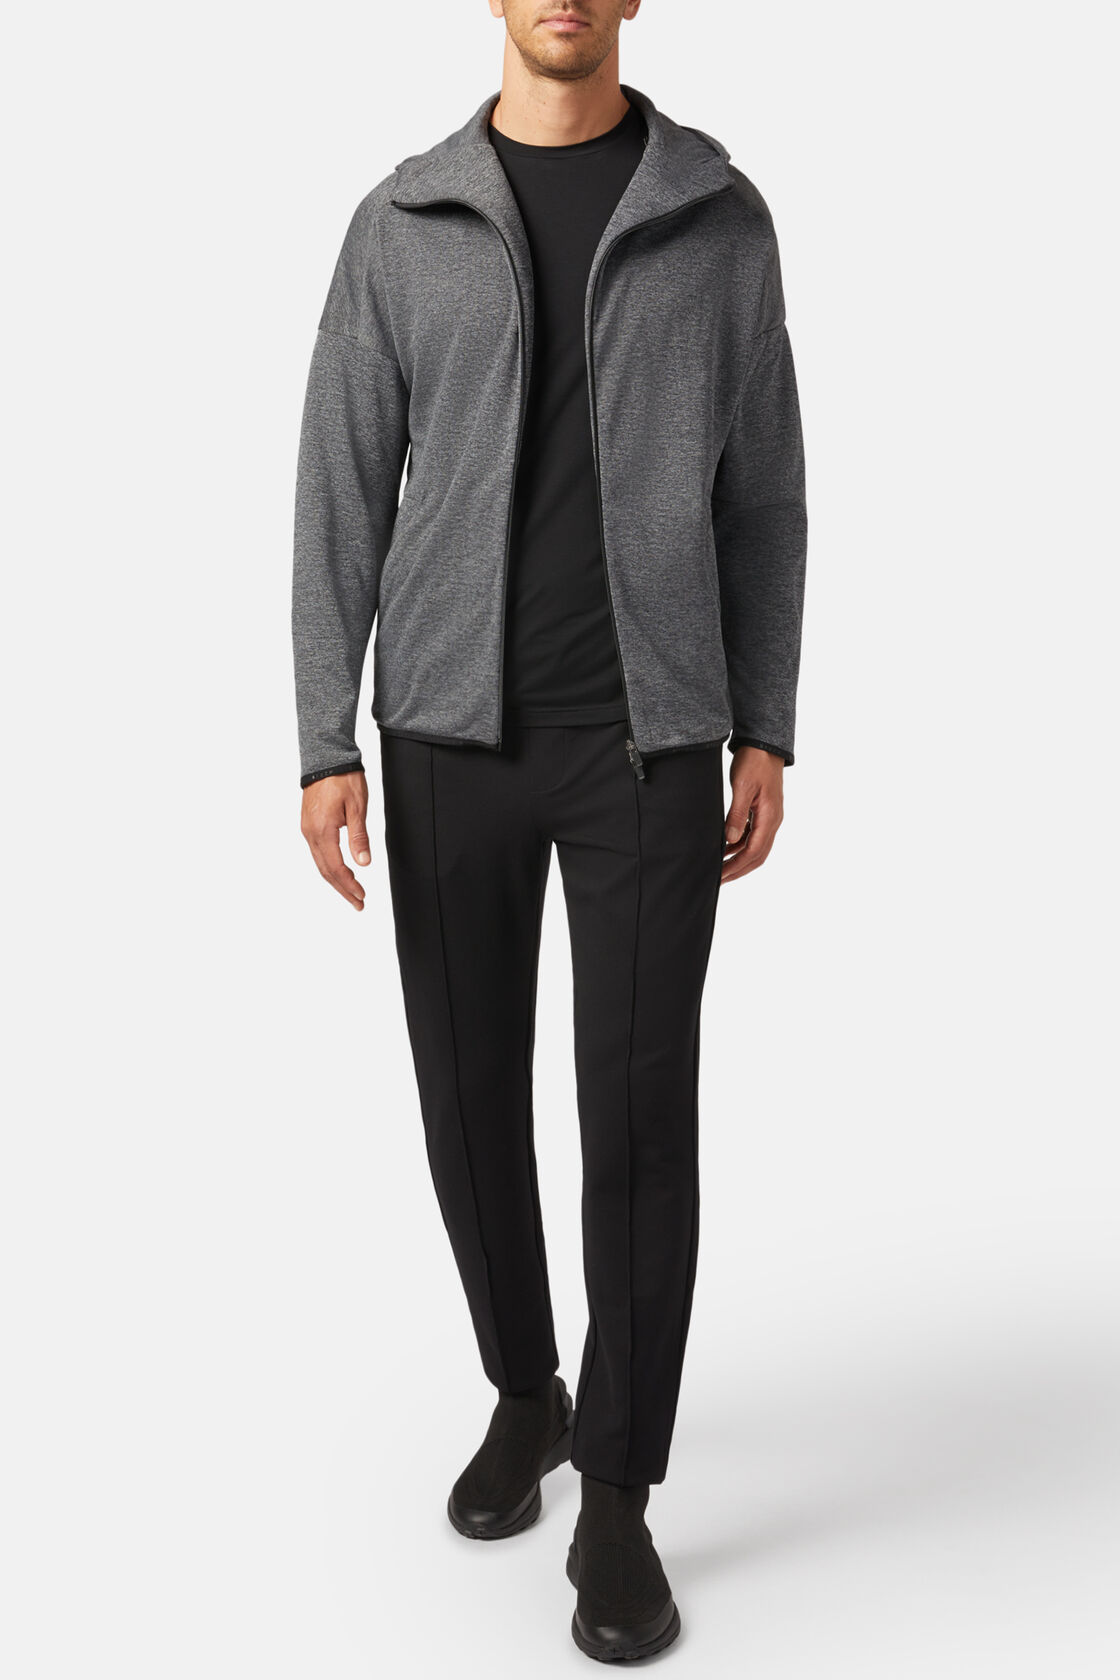 Full Zip Hooded Sweatshirt in Technical Fabric, Charcoal, hi-res